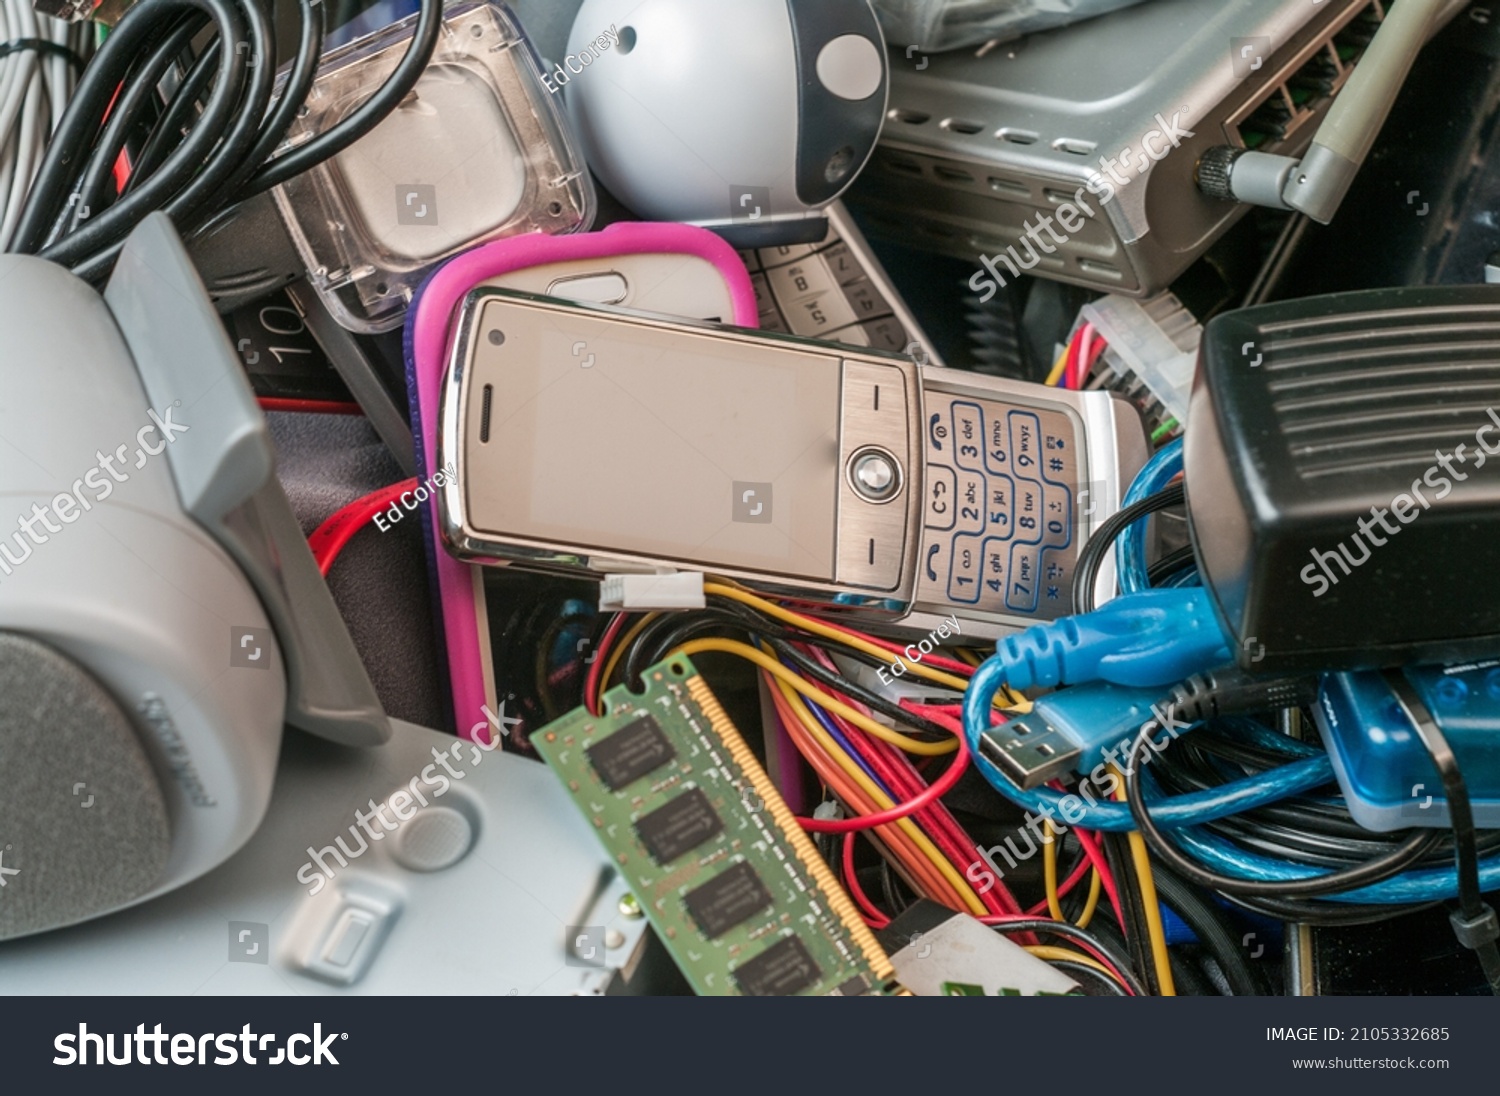 e-Waste including smartphones, memory, cables #2105332685